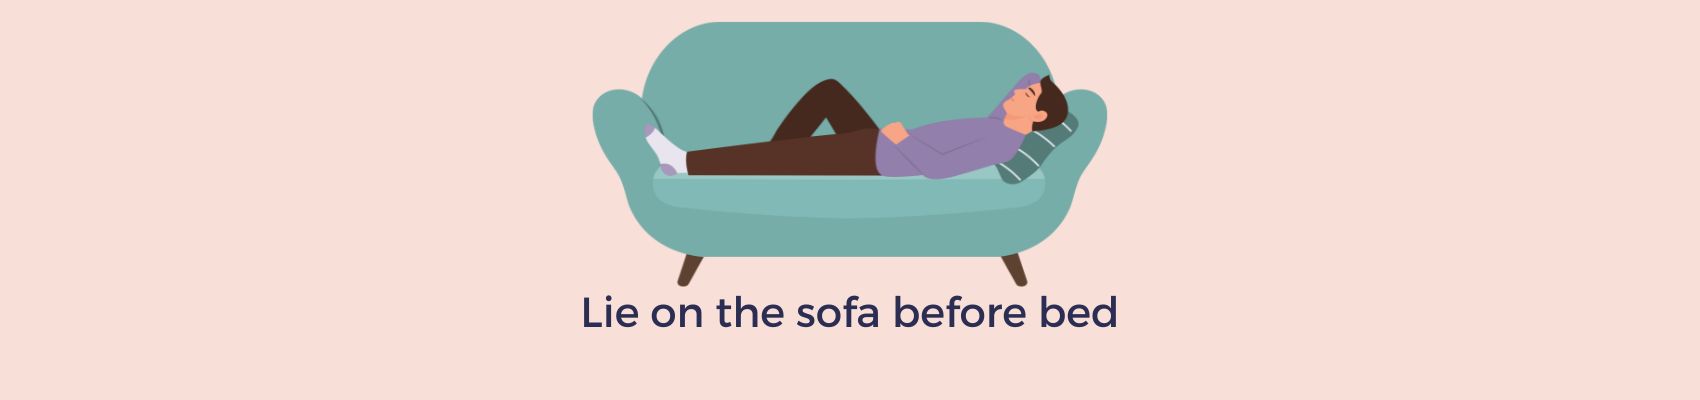 lie on sofa